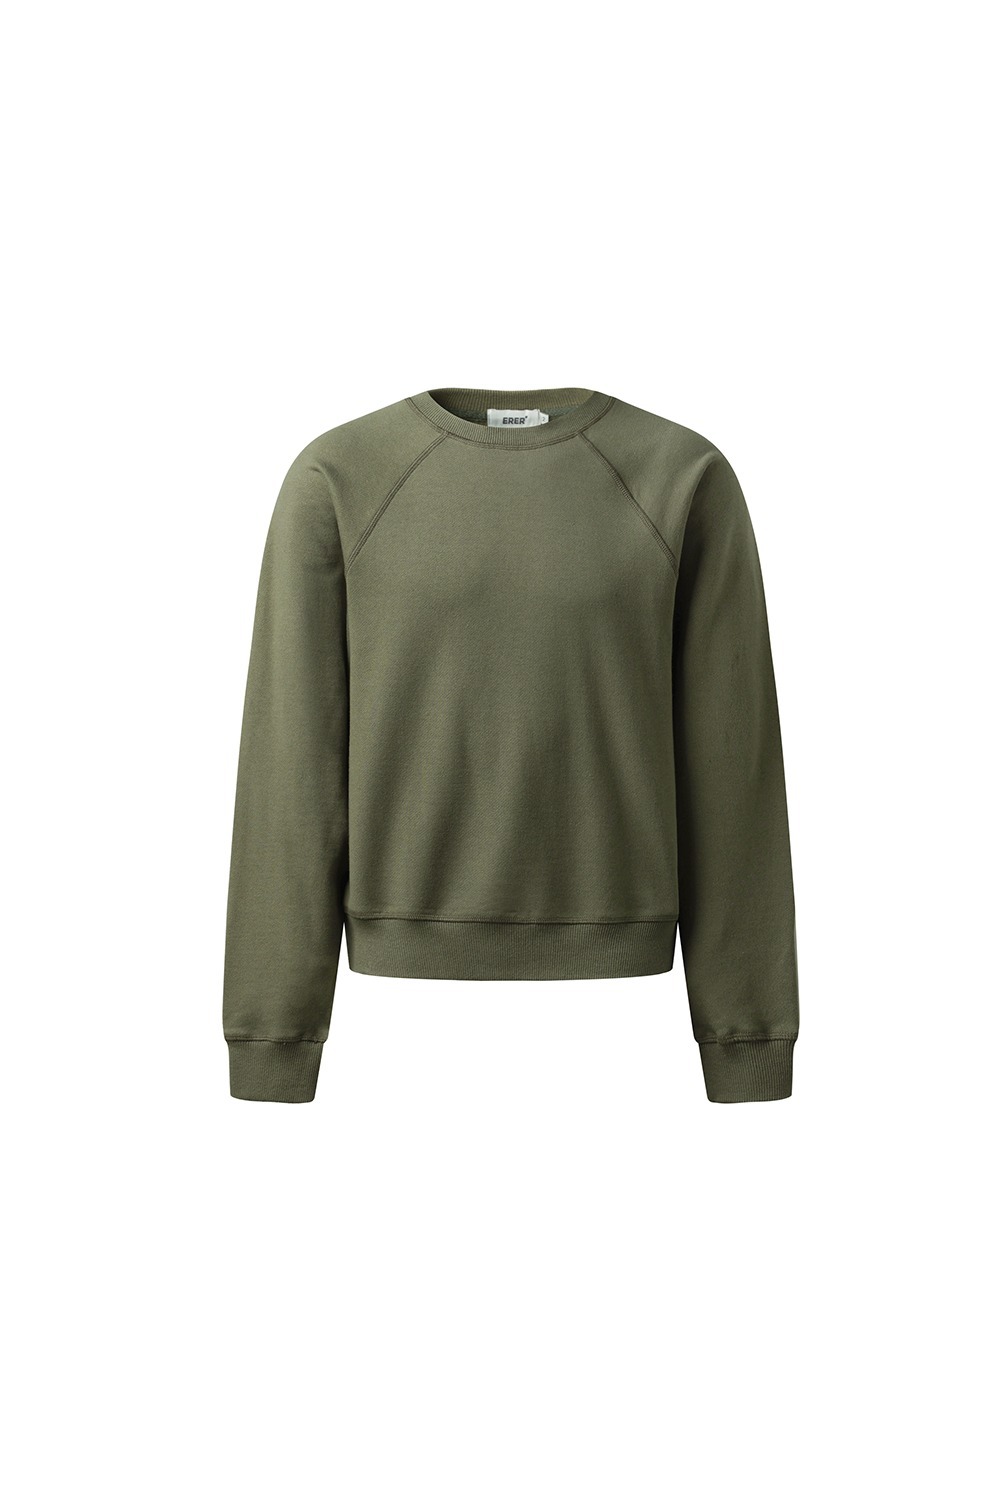 [UN] Basic sweatshirt - Khaki